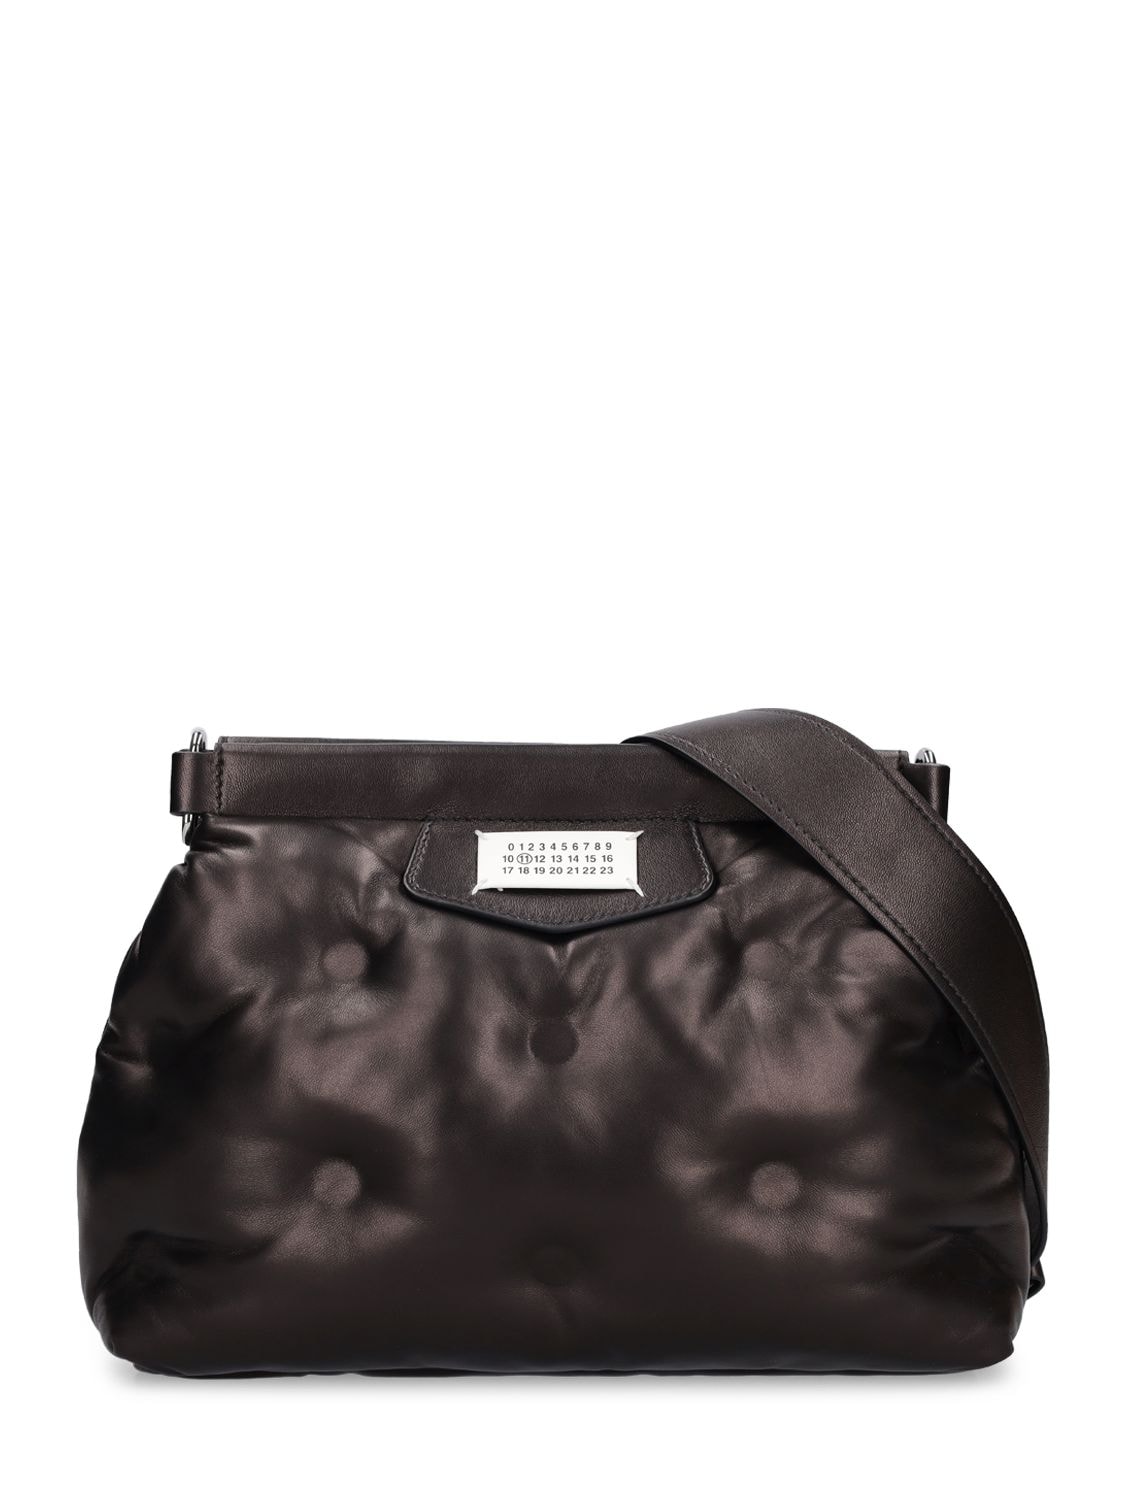 Maison Margiela Glam Slam Classique Small Bag In T8013 | ModeSens